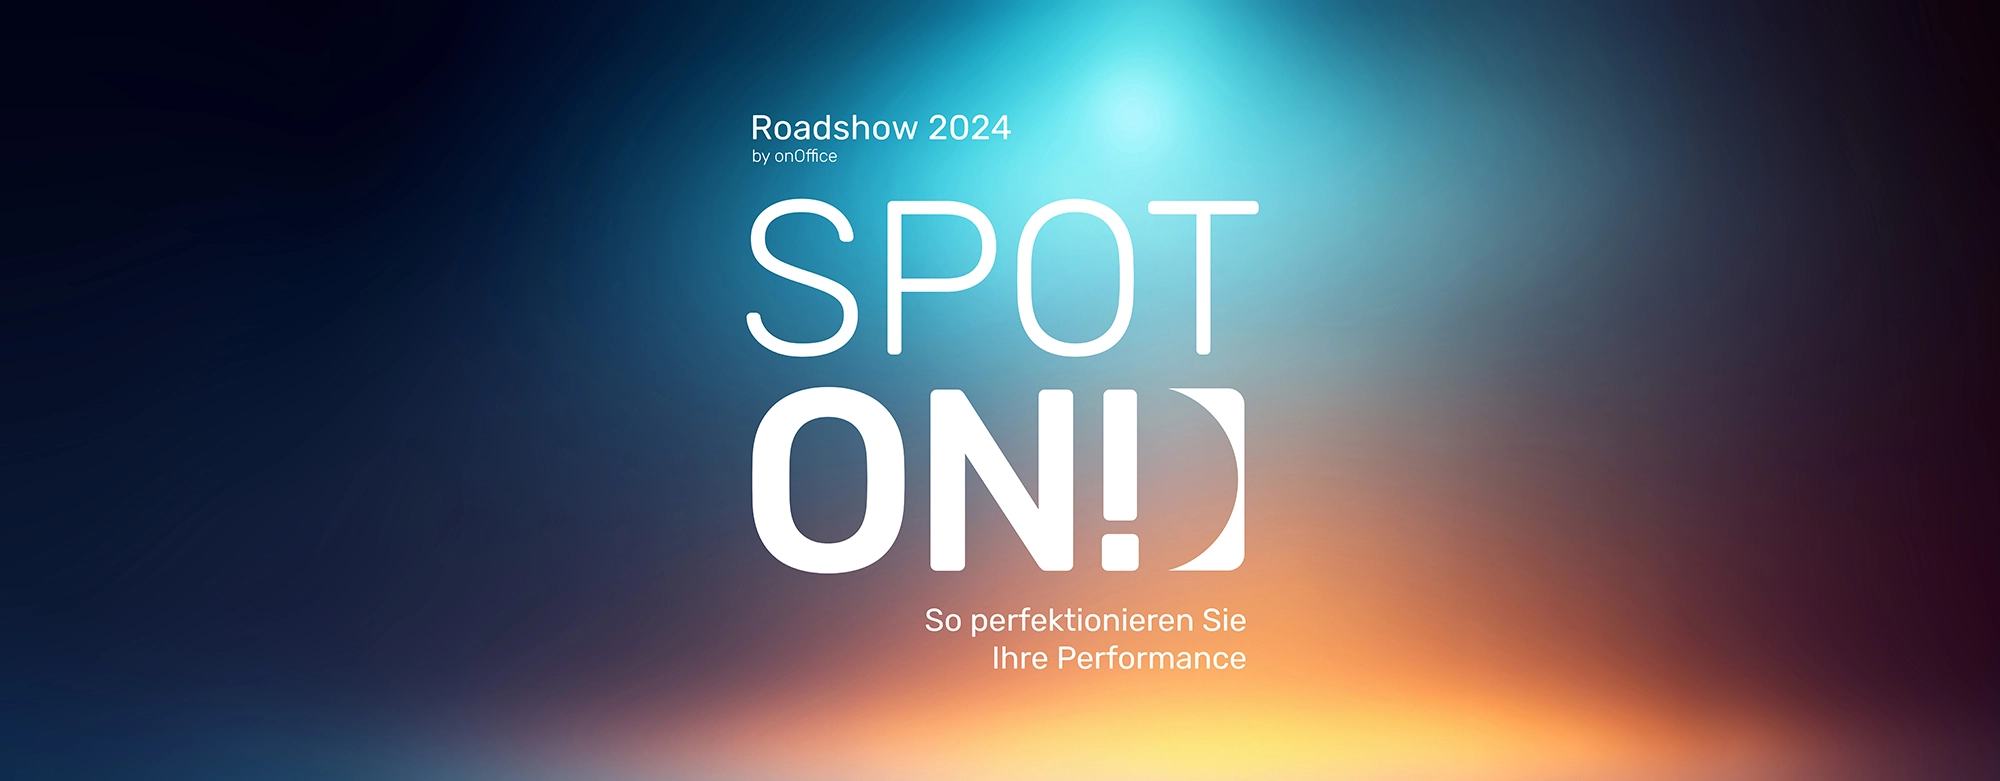 onOffice Roadshow 2024